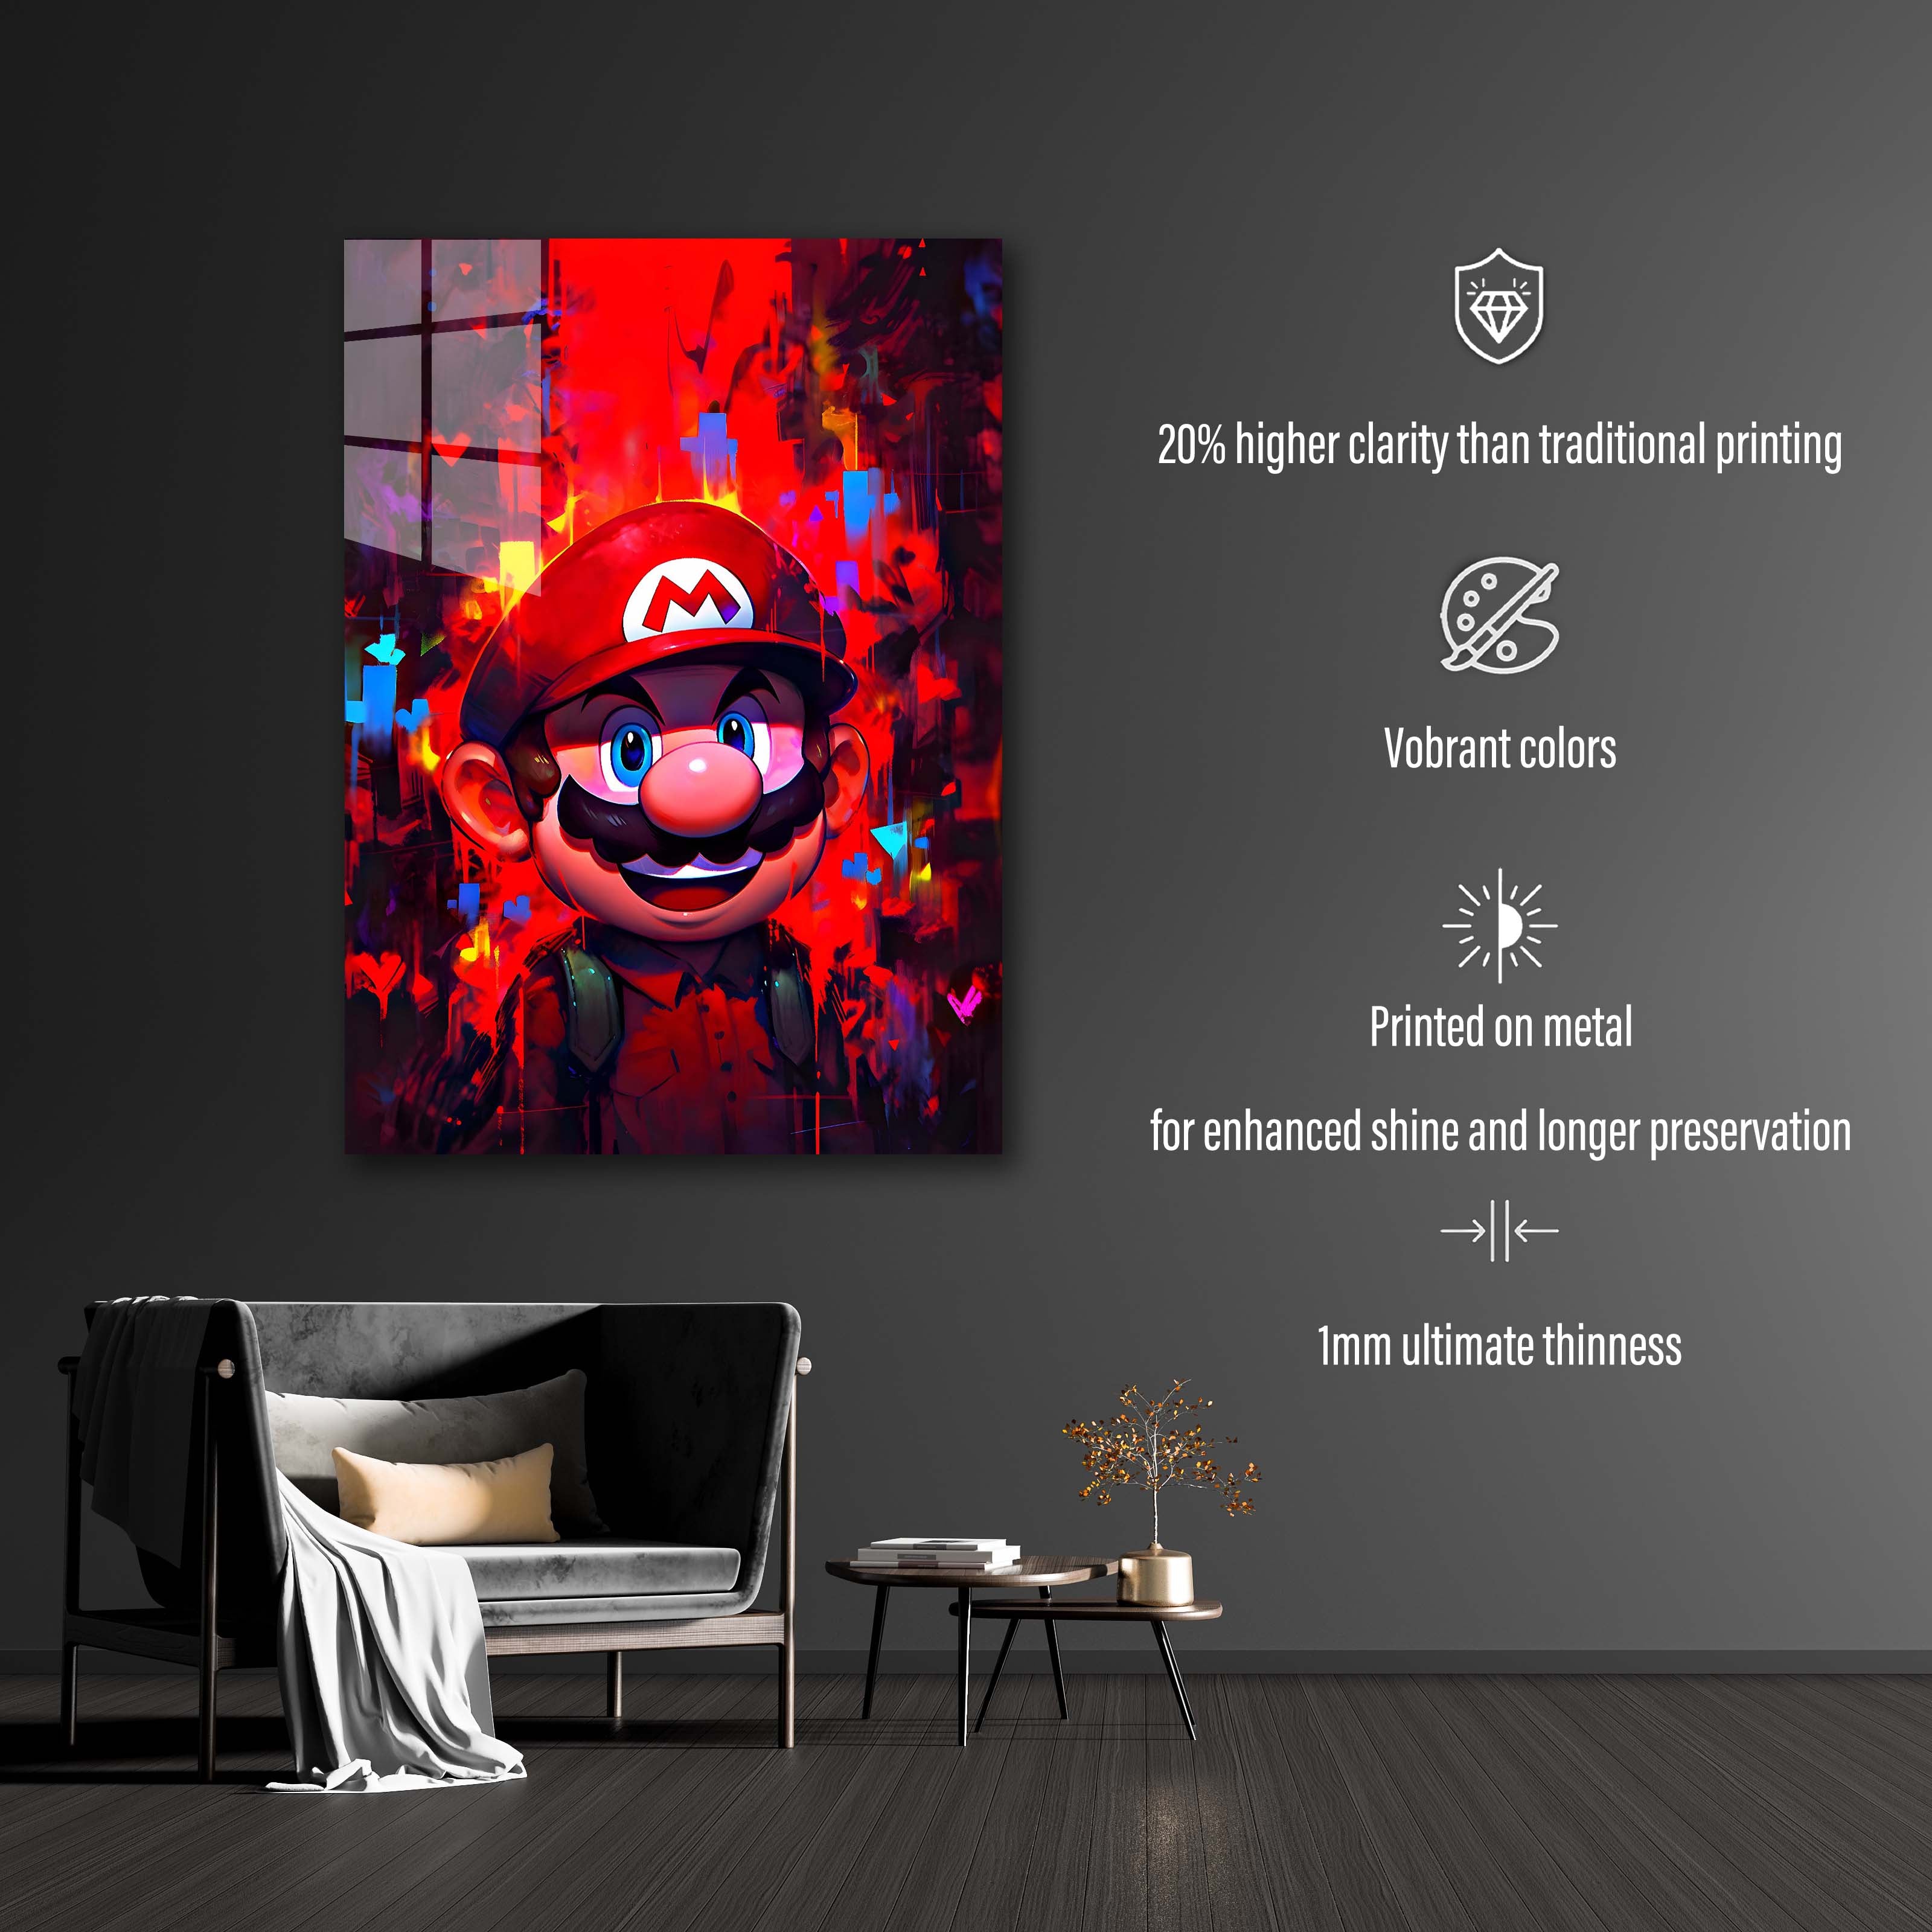 Mario chromatic-designed by @Vid_M@tion